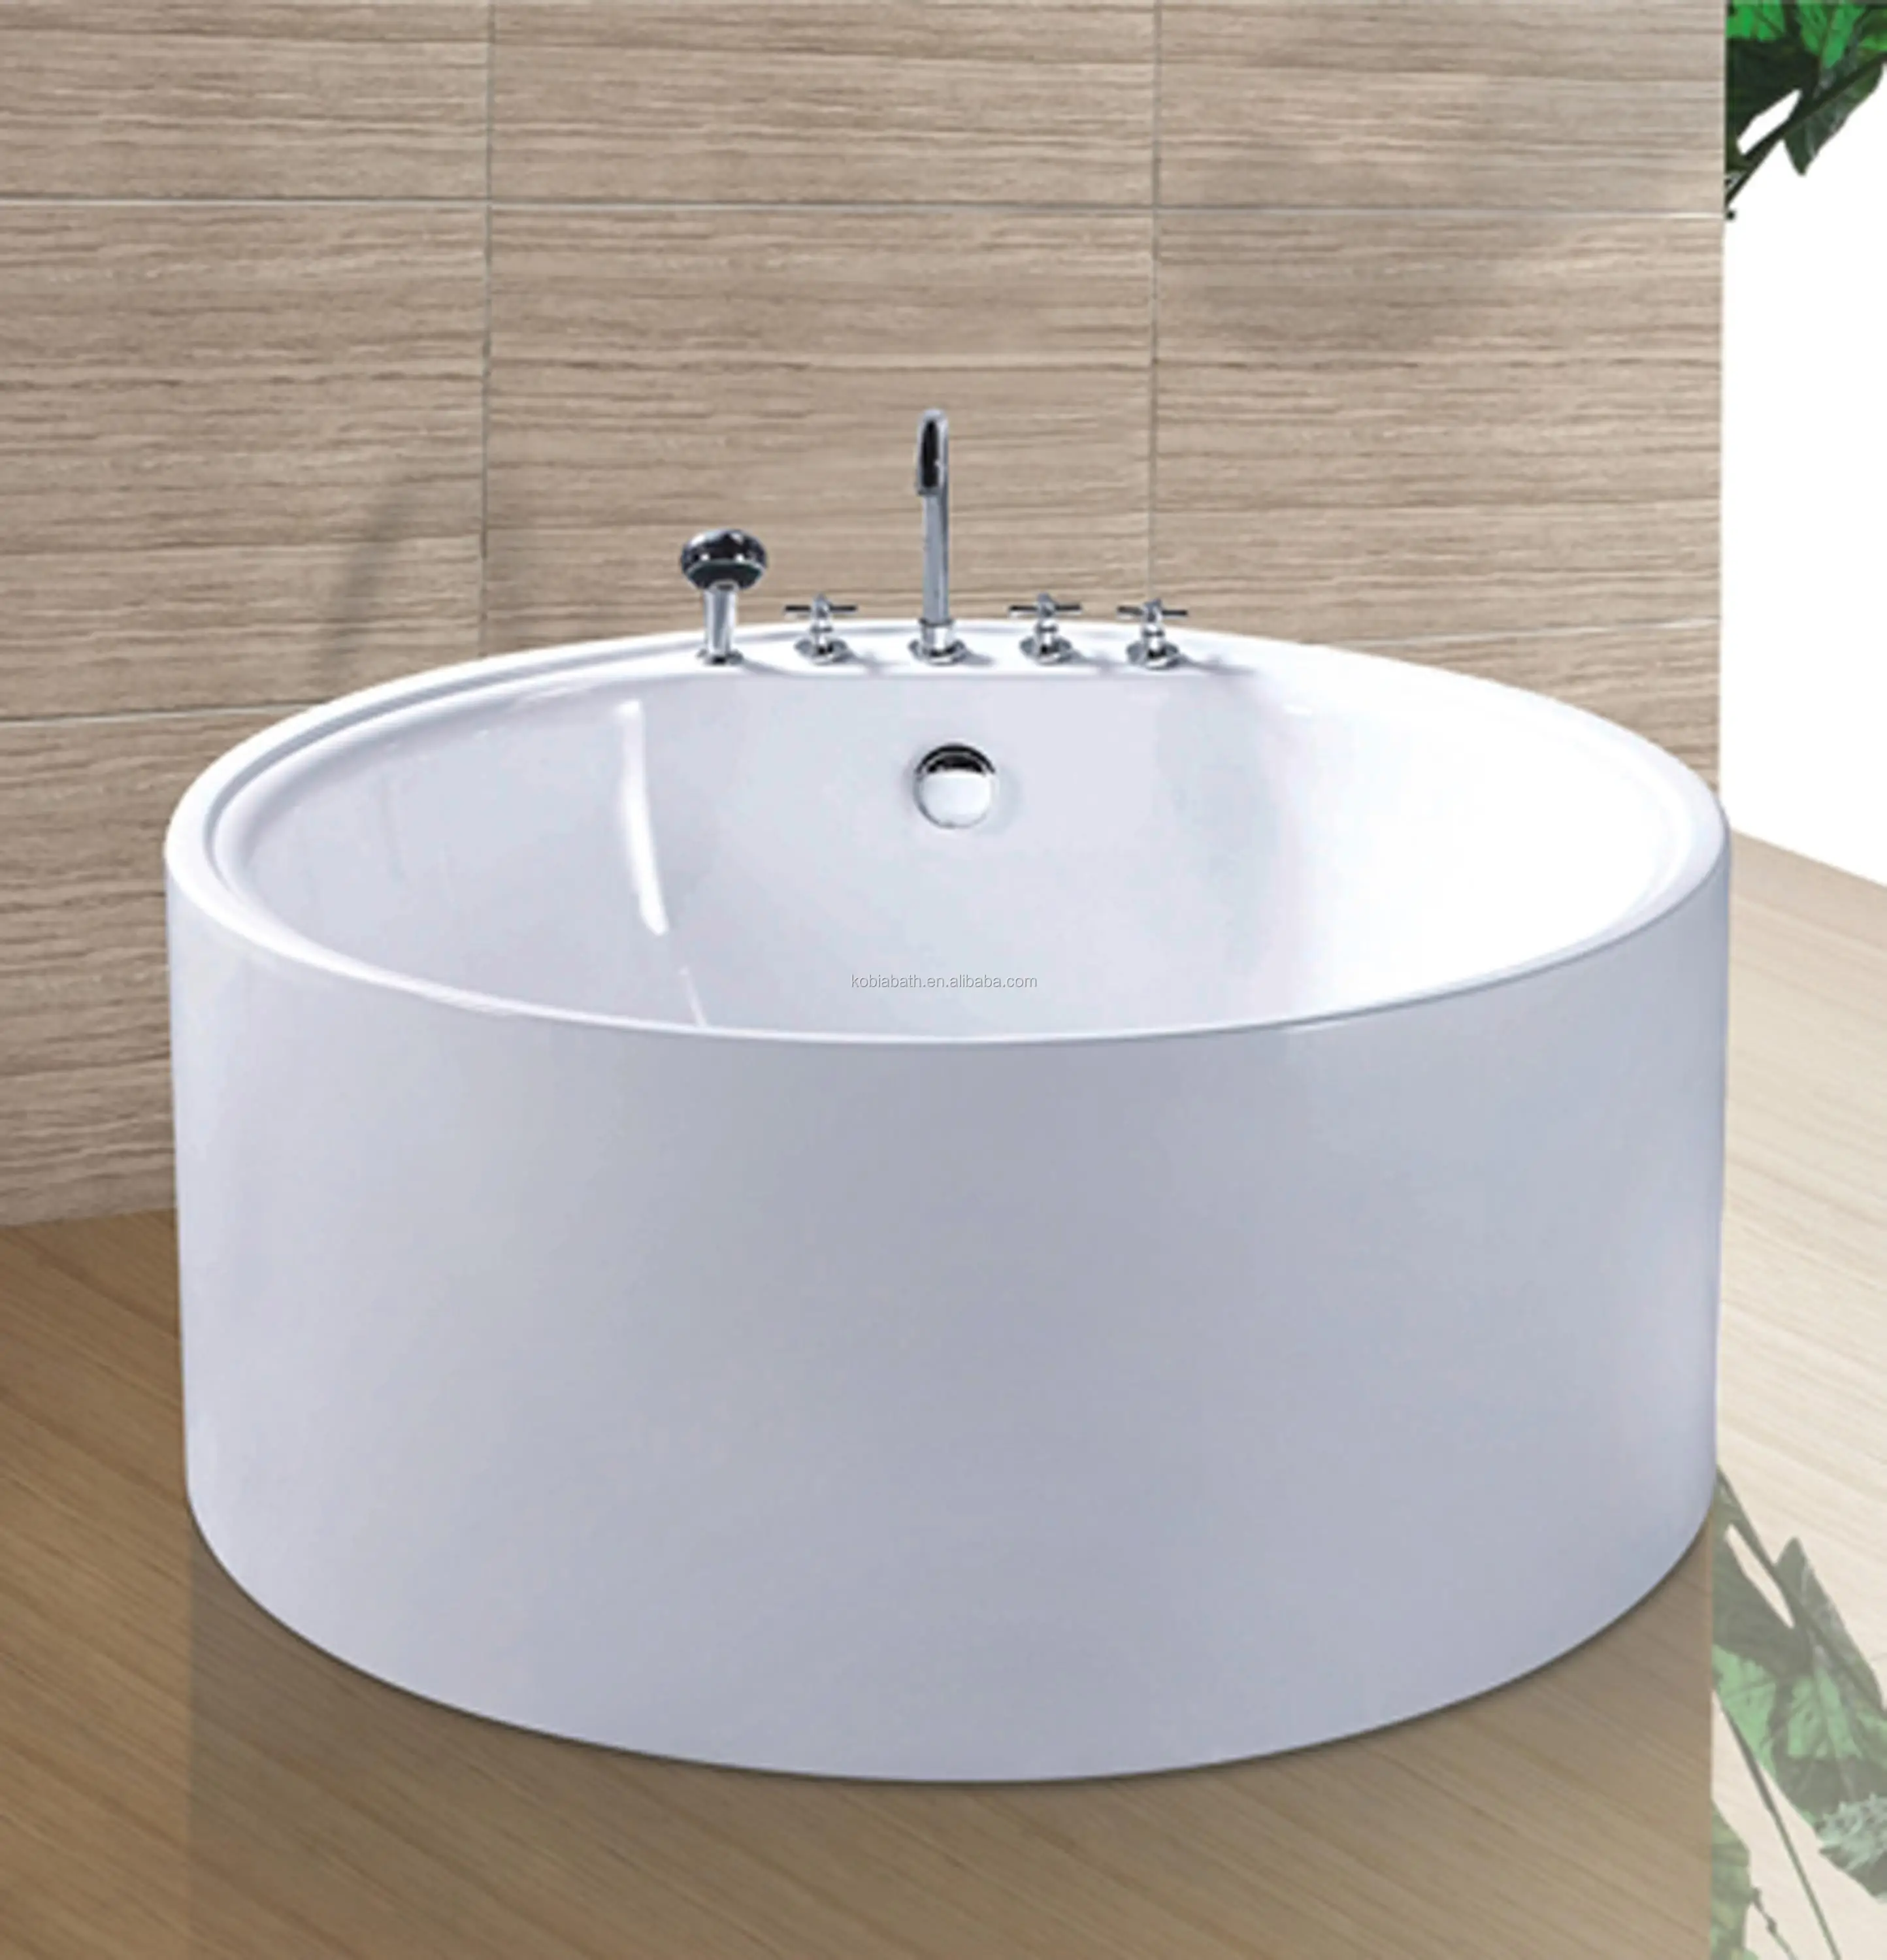 Chinese Supplier Small Round Acrylic Bathtub Portable Bathtub For